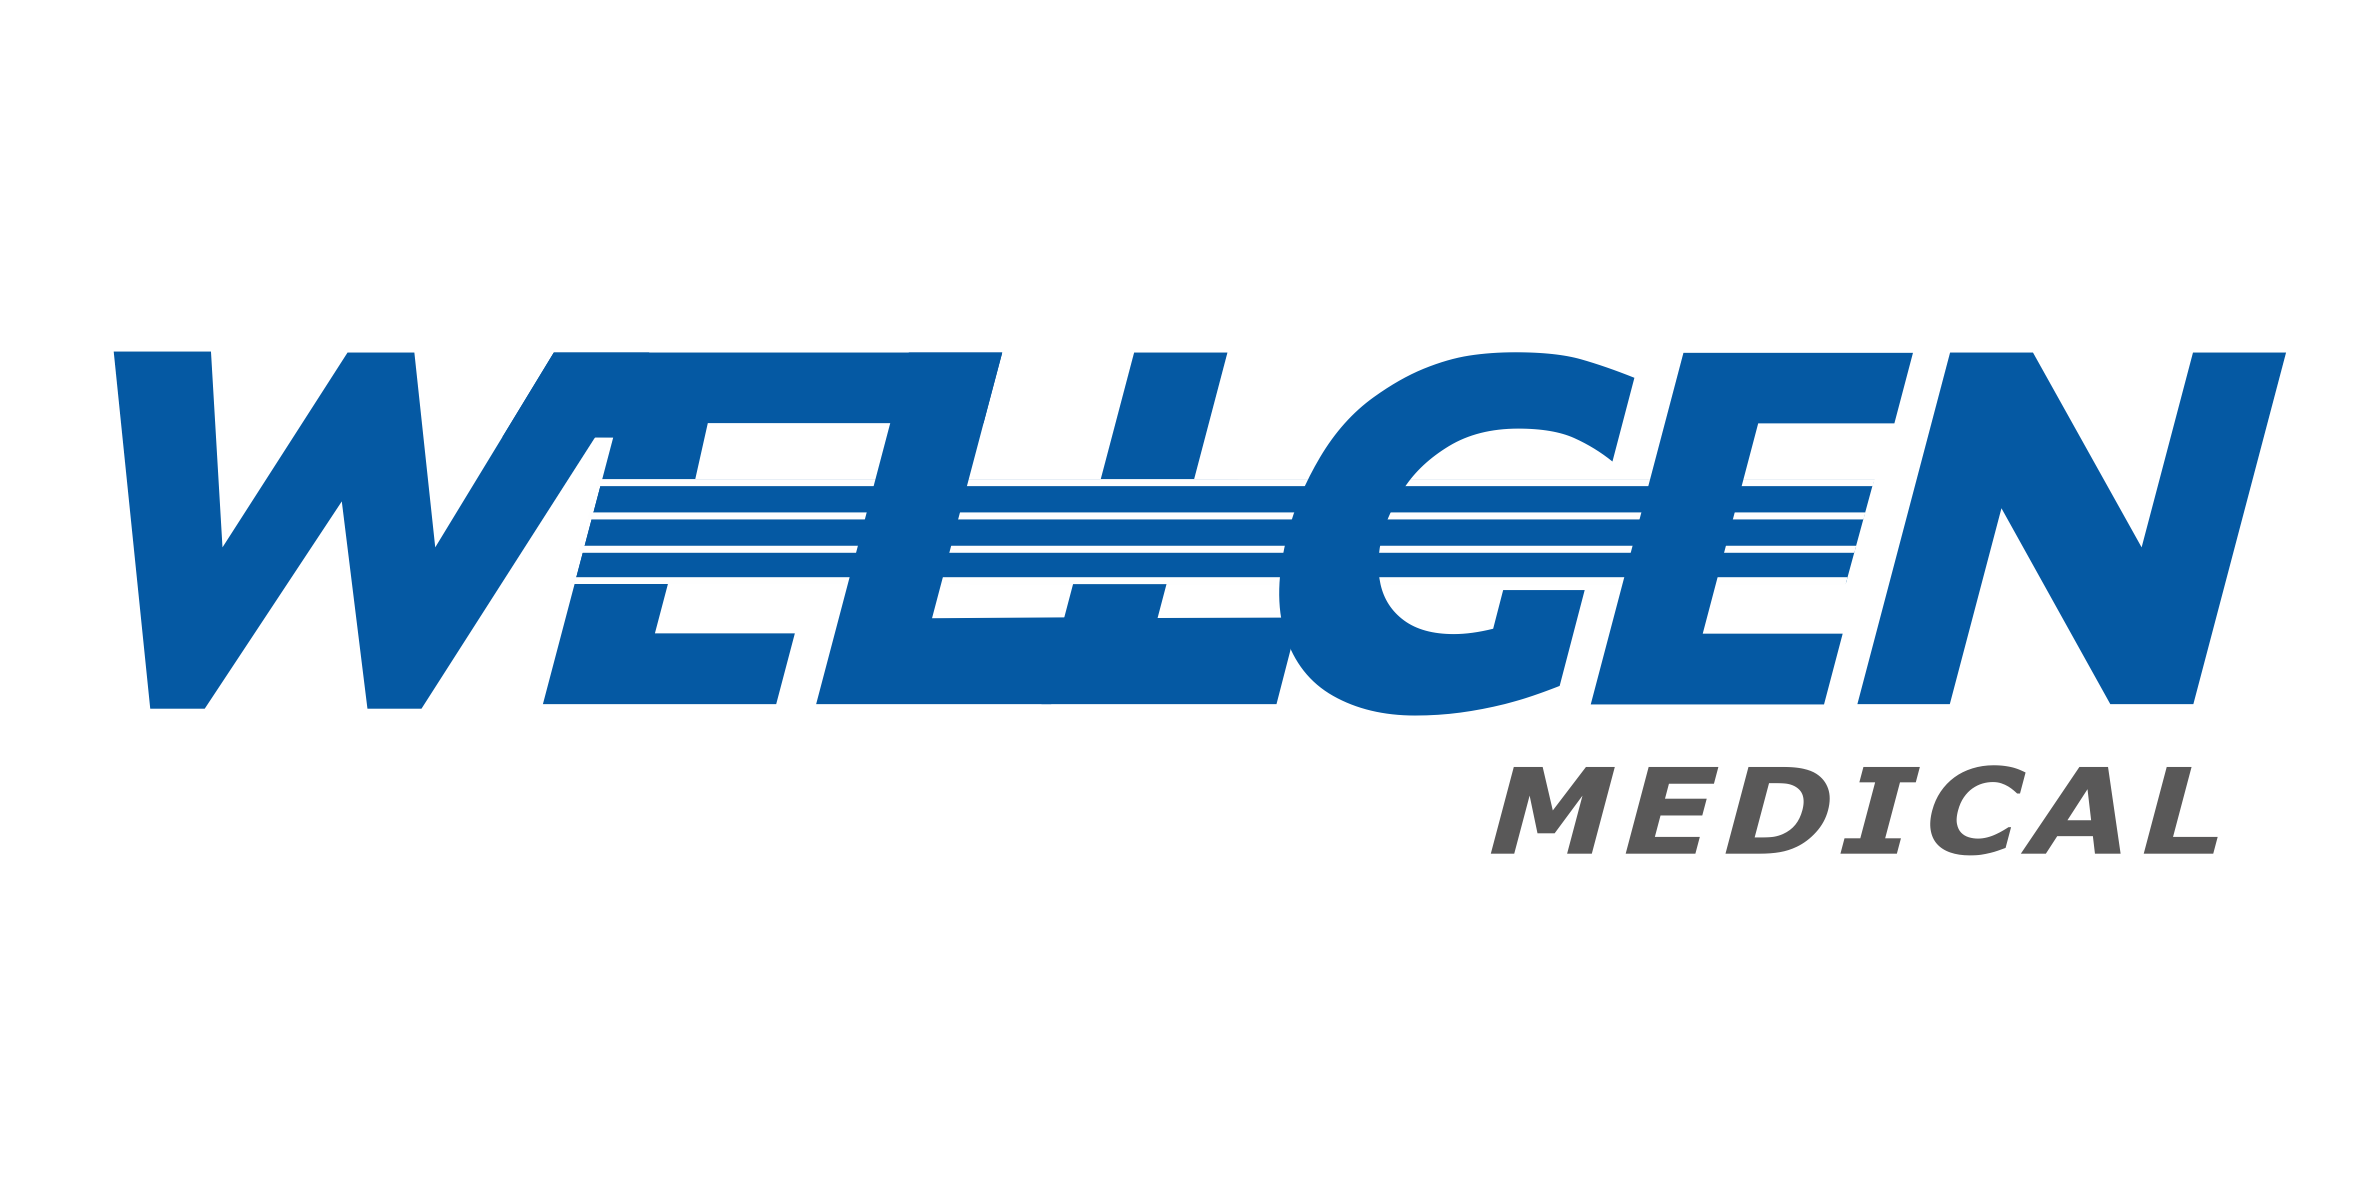 Wellgen logo